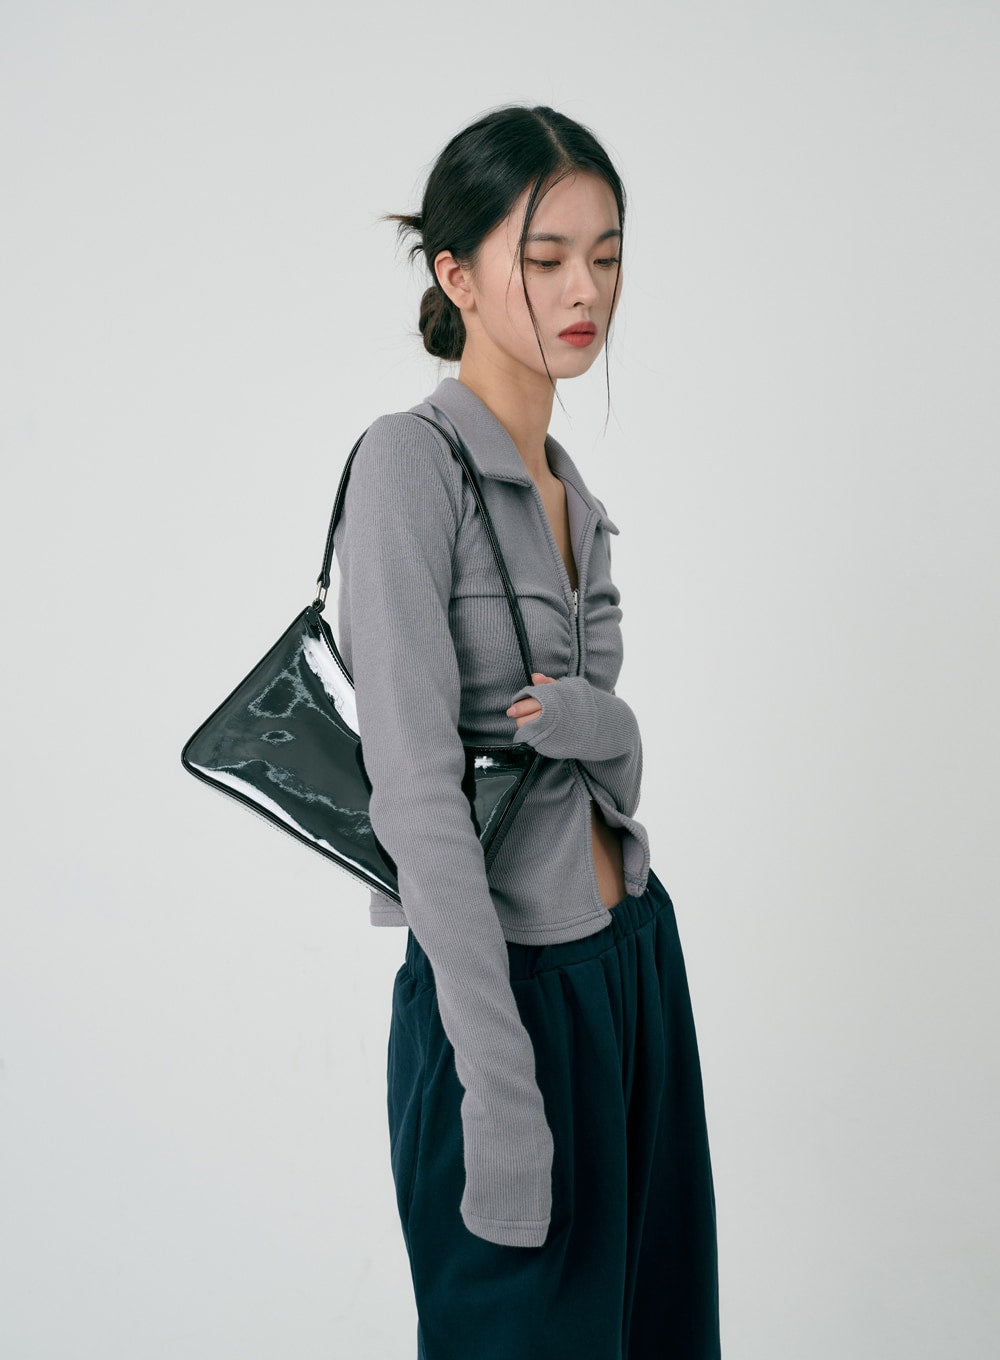 Meet The $19 Crossbody Bag That's A Near-Perfect Lululemon Dupe